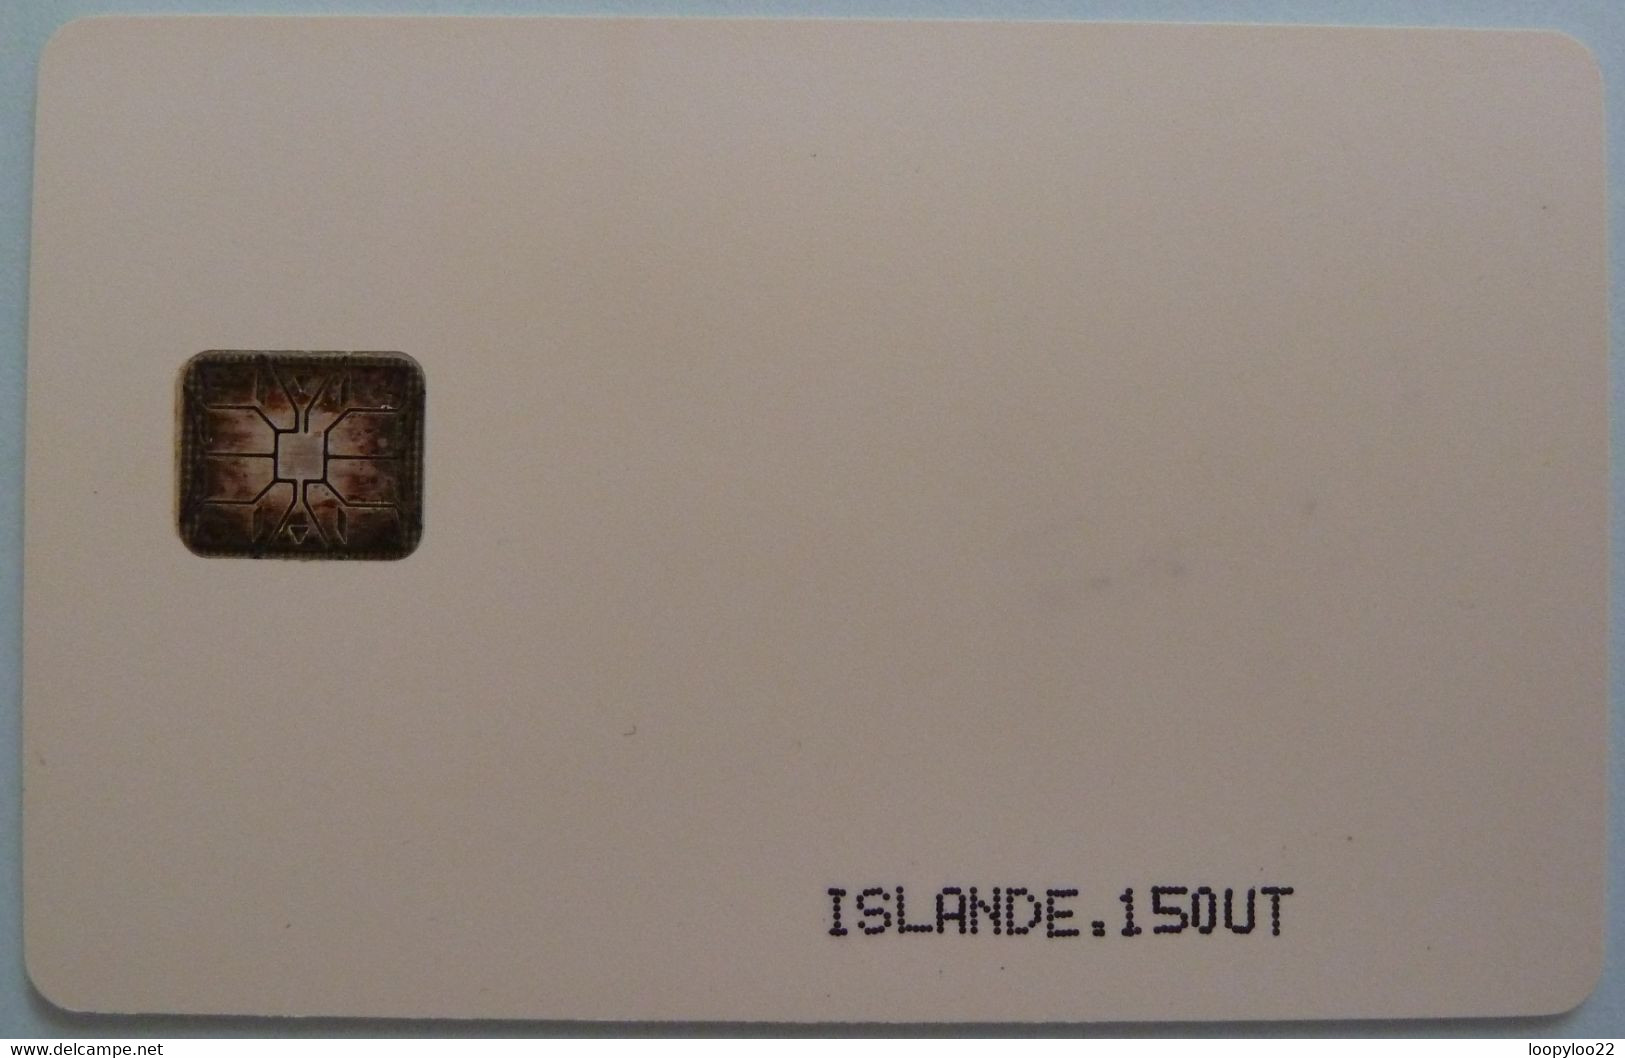 ICELAND - Chip - Schlumberger - Test / Demo - 150 Units - Mint - RRR - Iceland